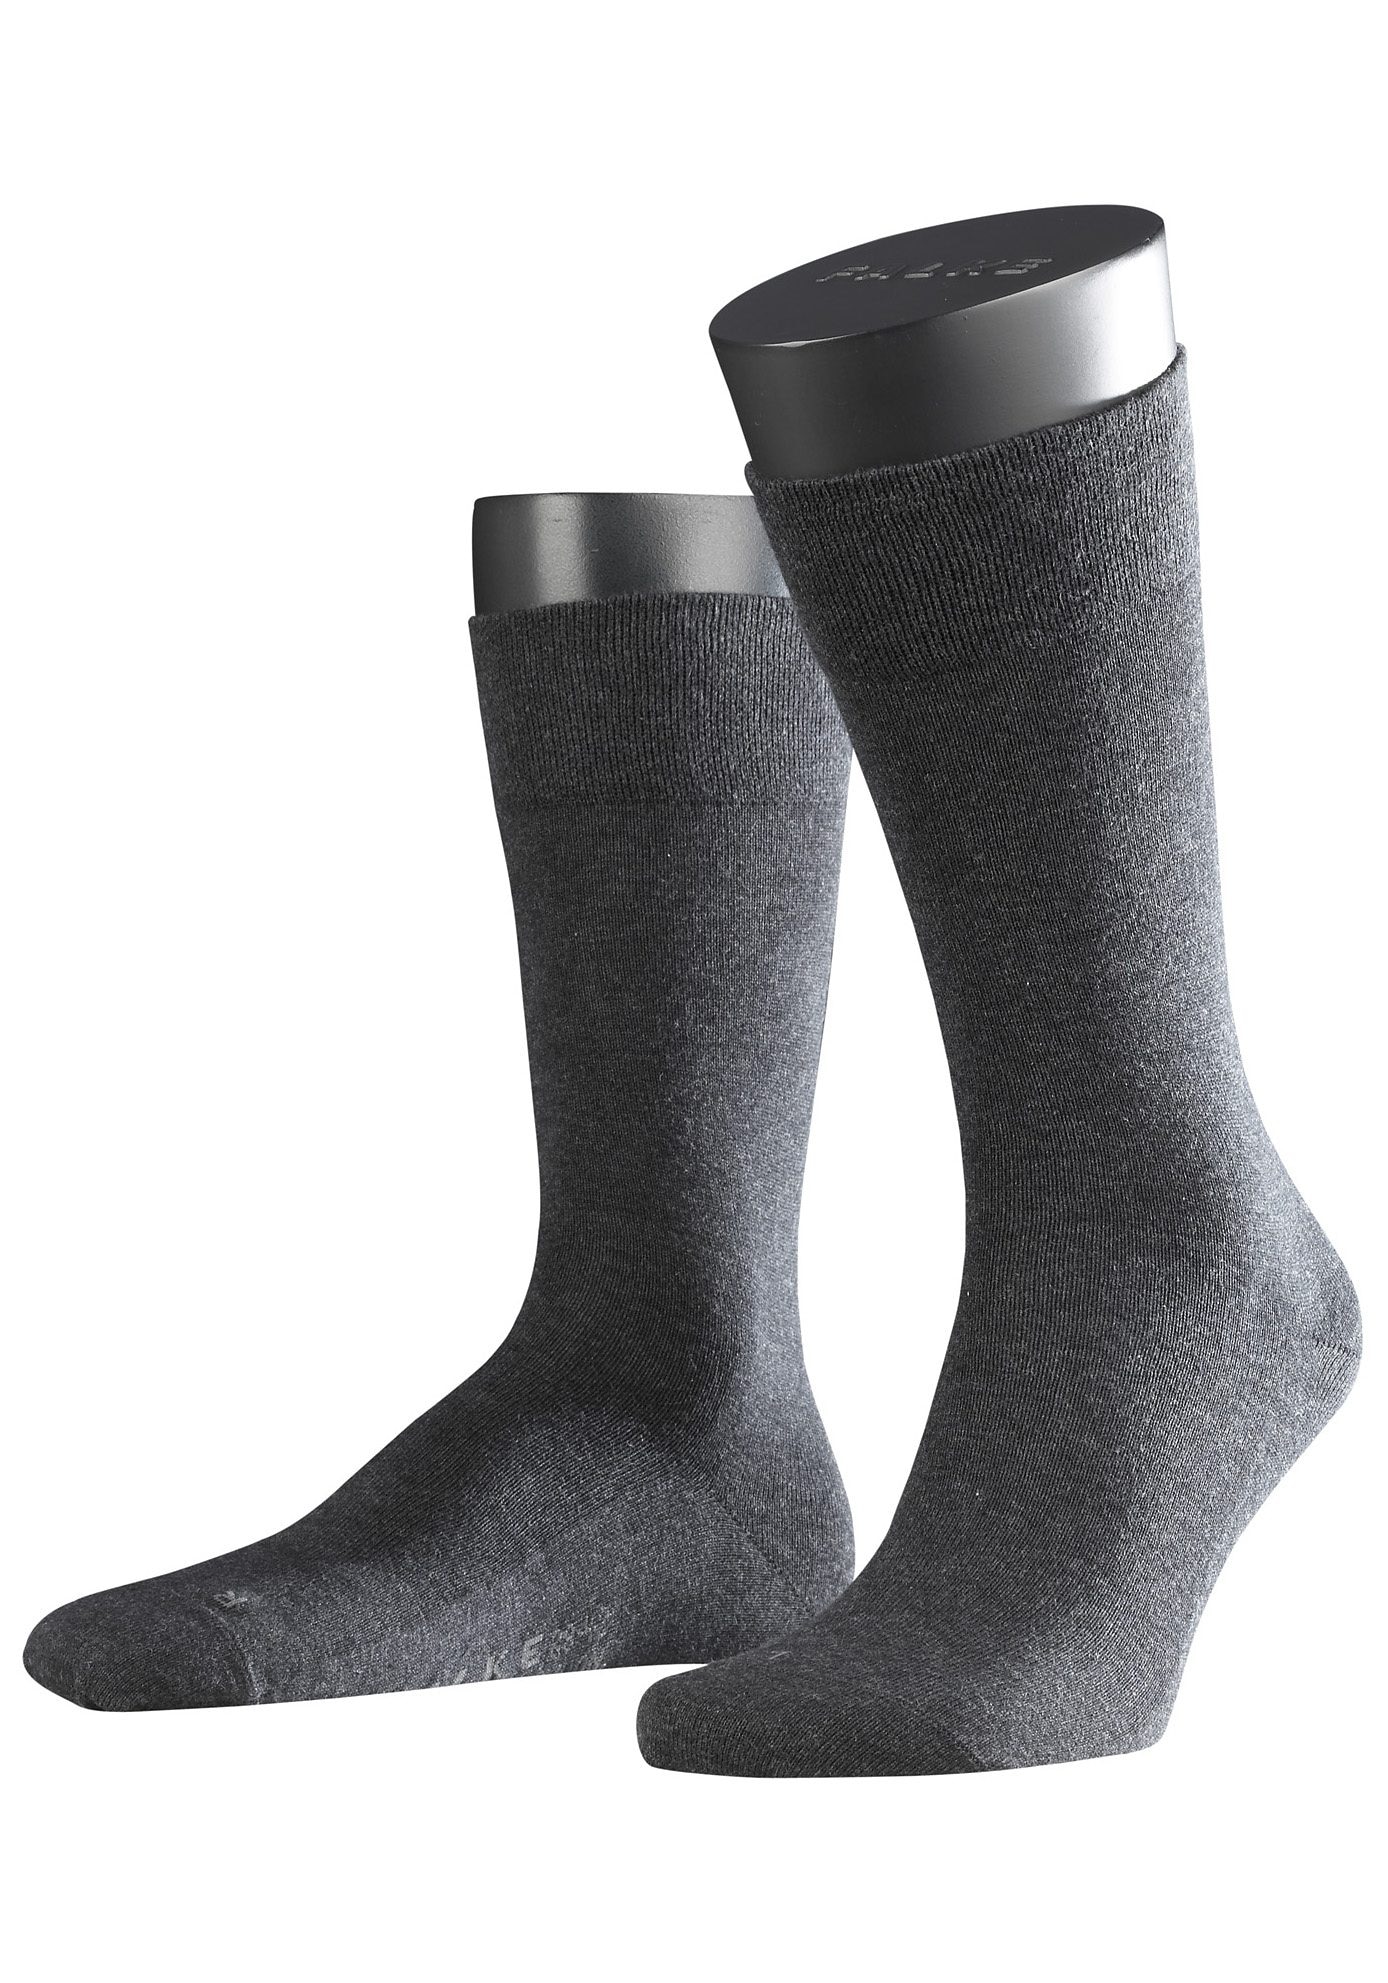 FALKE Socken »Sensitive London«, (2 Paar), mit sensitve Bündchen ohne Gummi  günstig kaufen